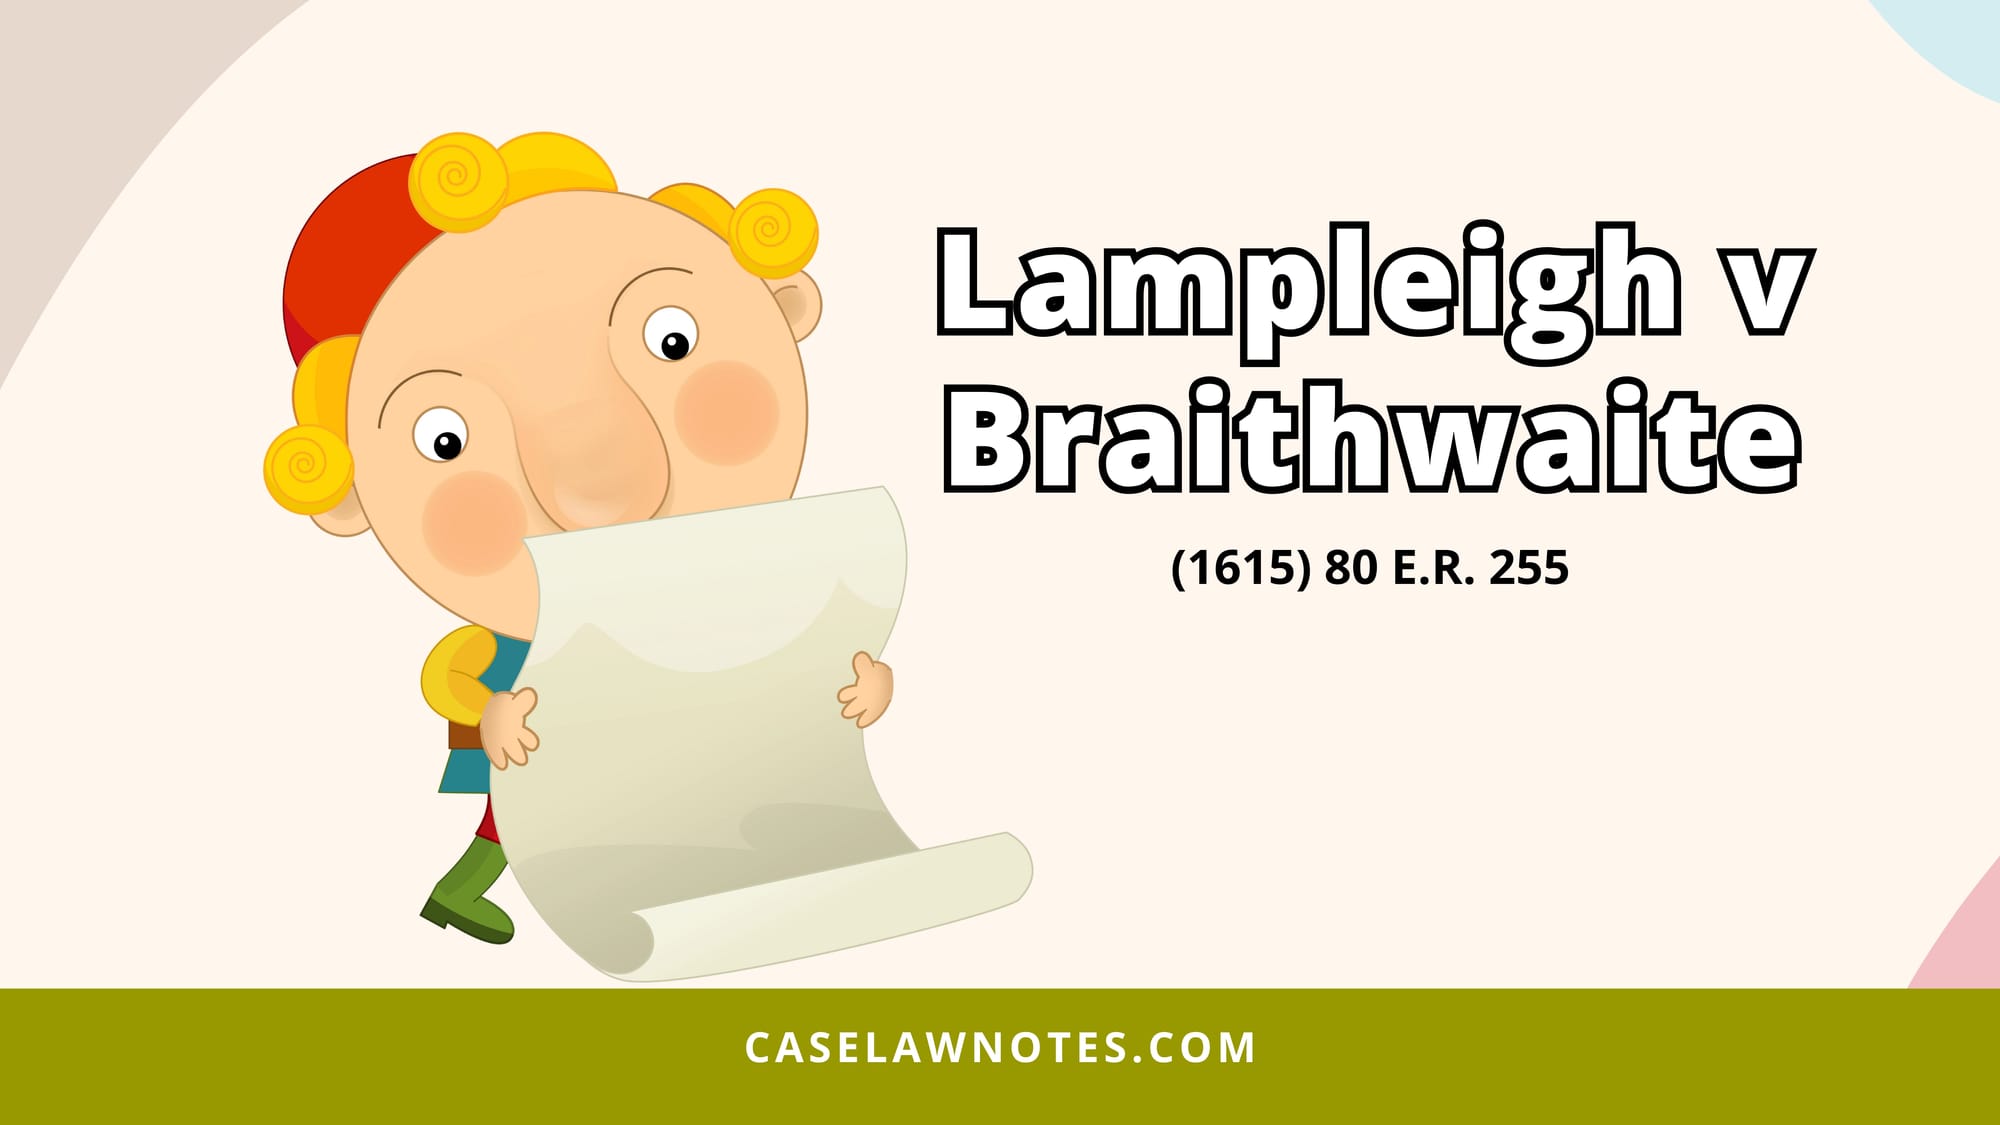 Lampleigh v Braithwaite - case summary - consideration - past consideration